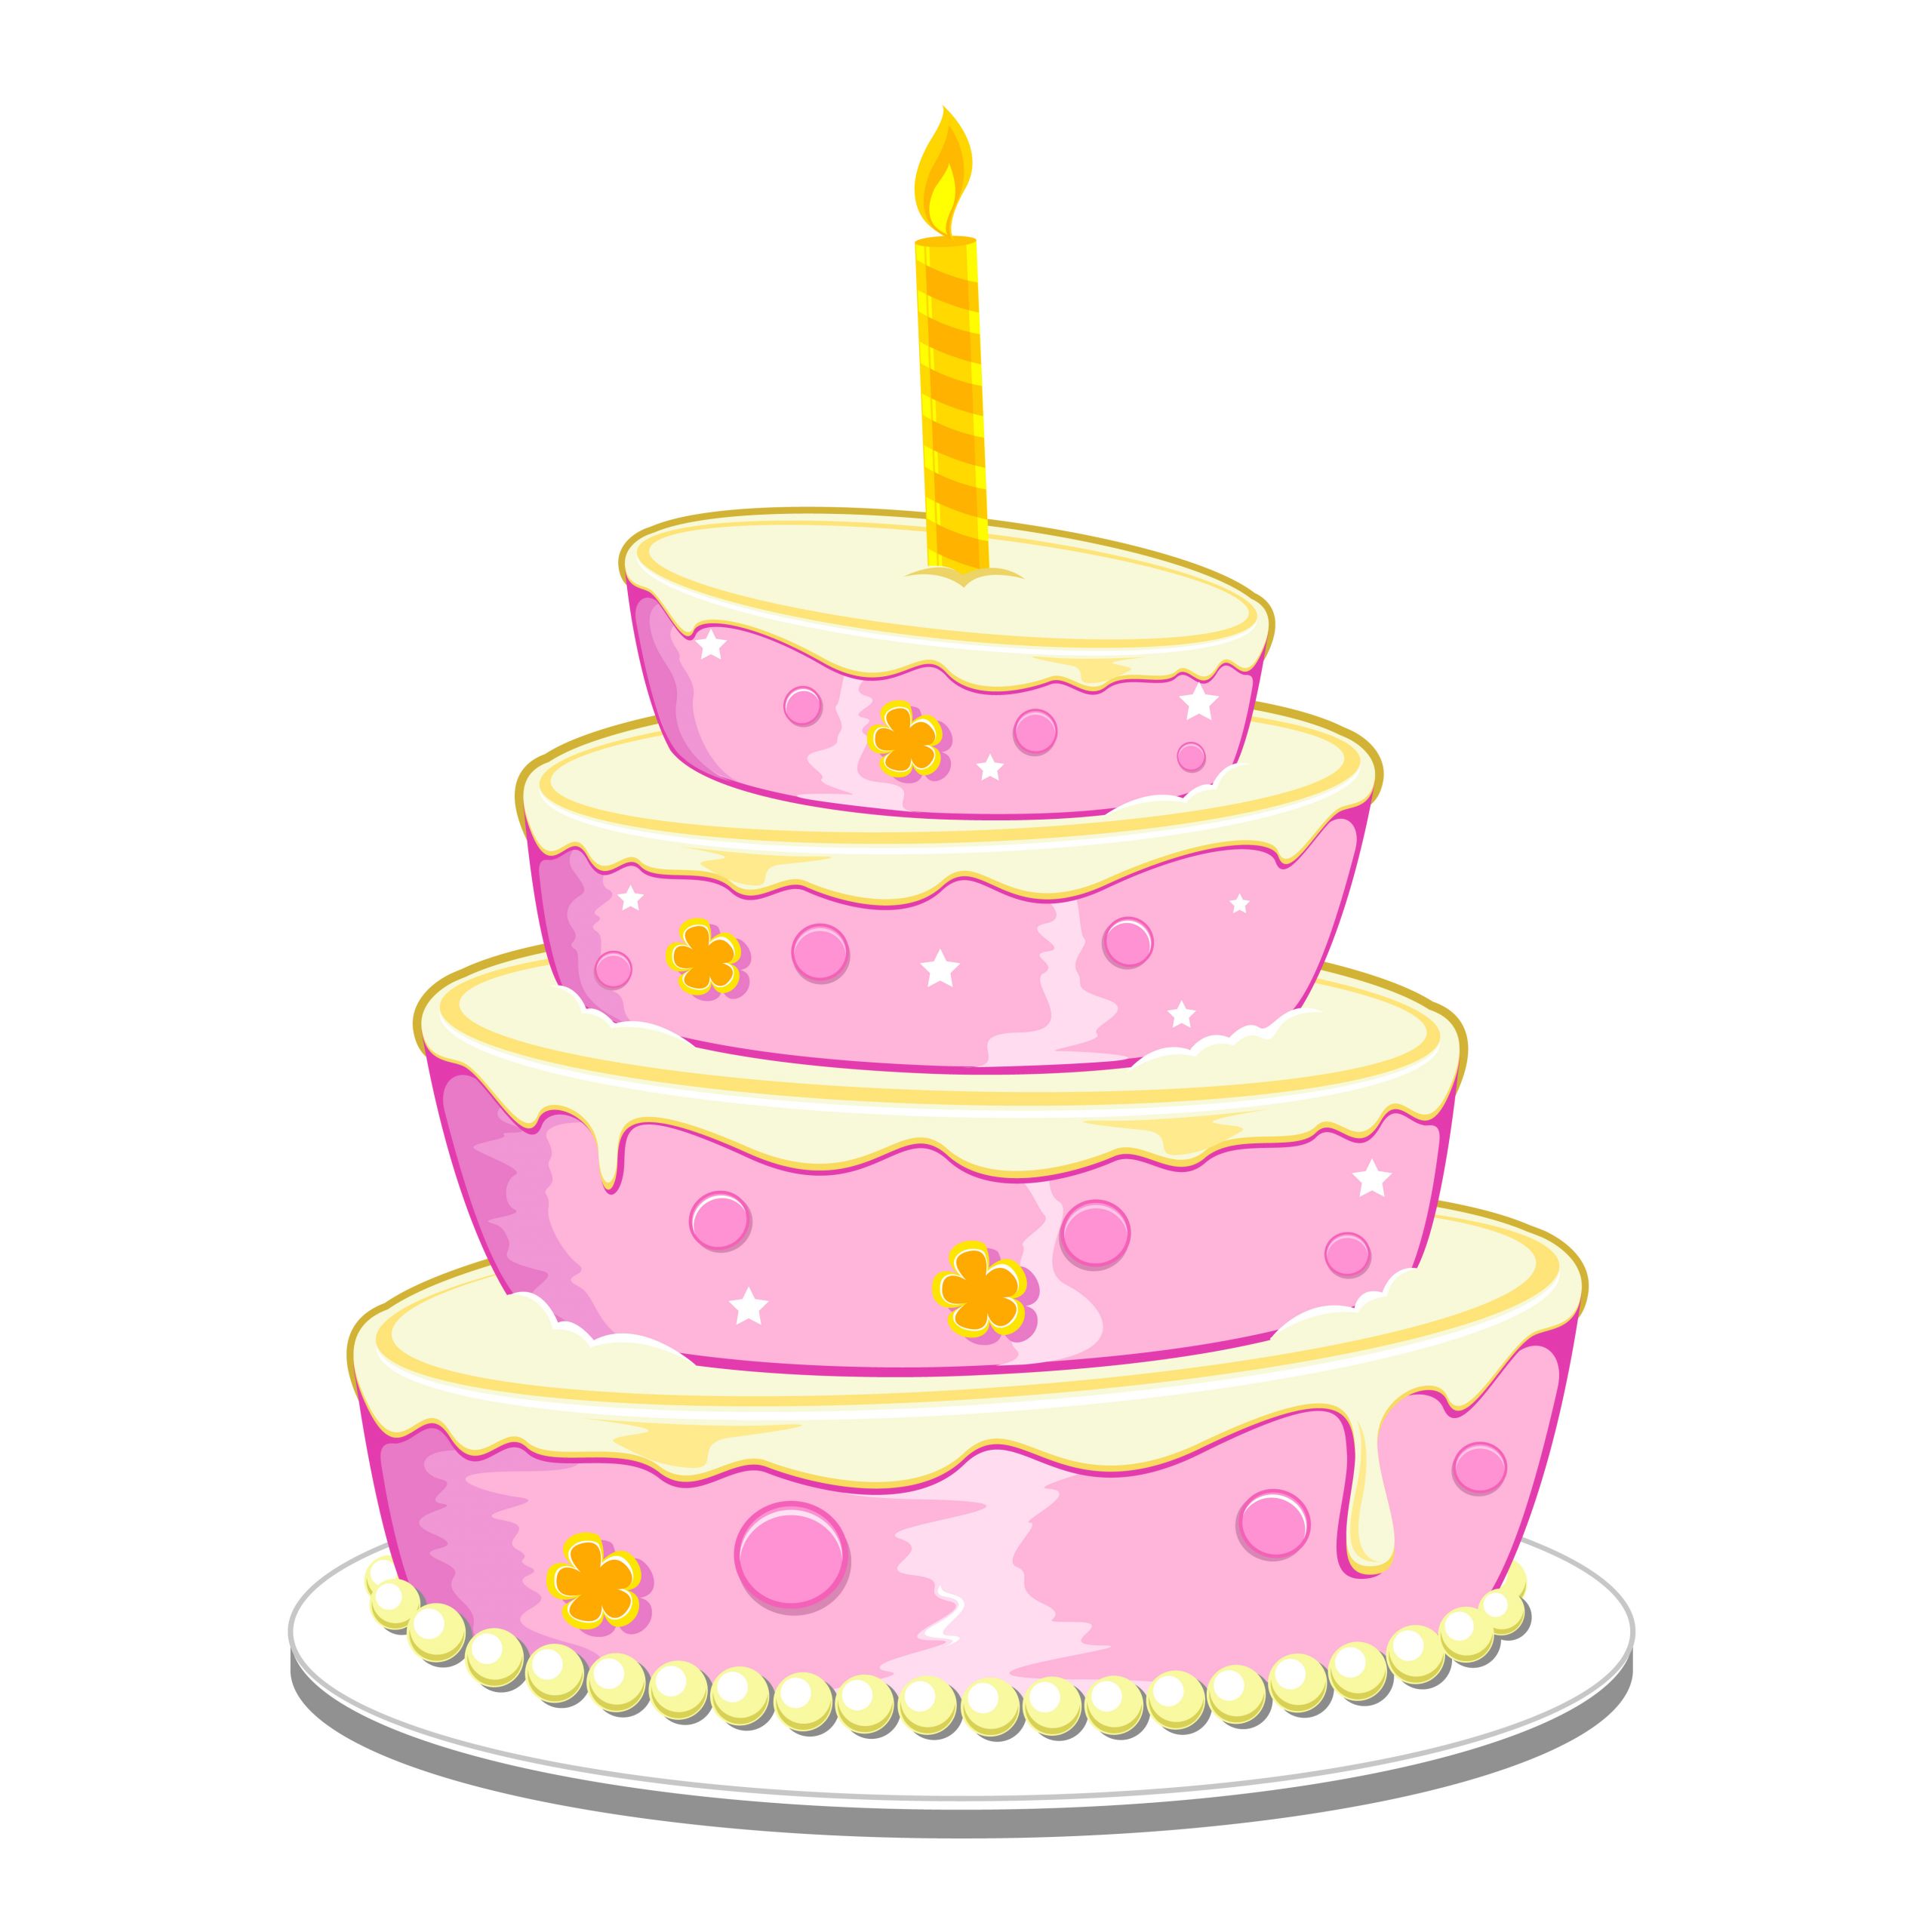 15 Great Birthday Cake Vector